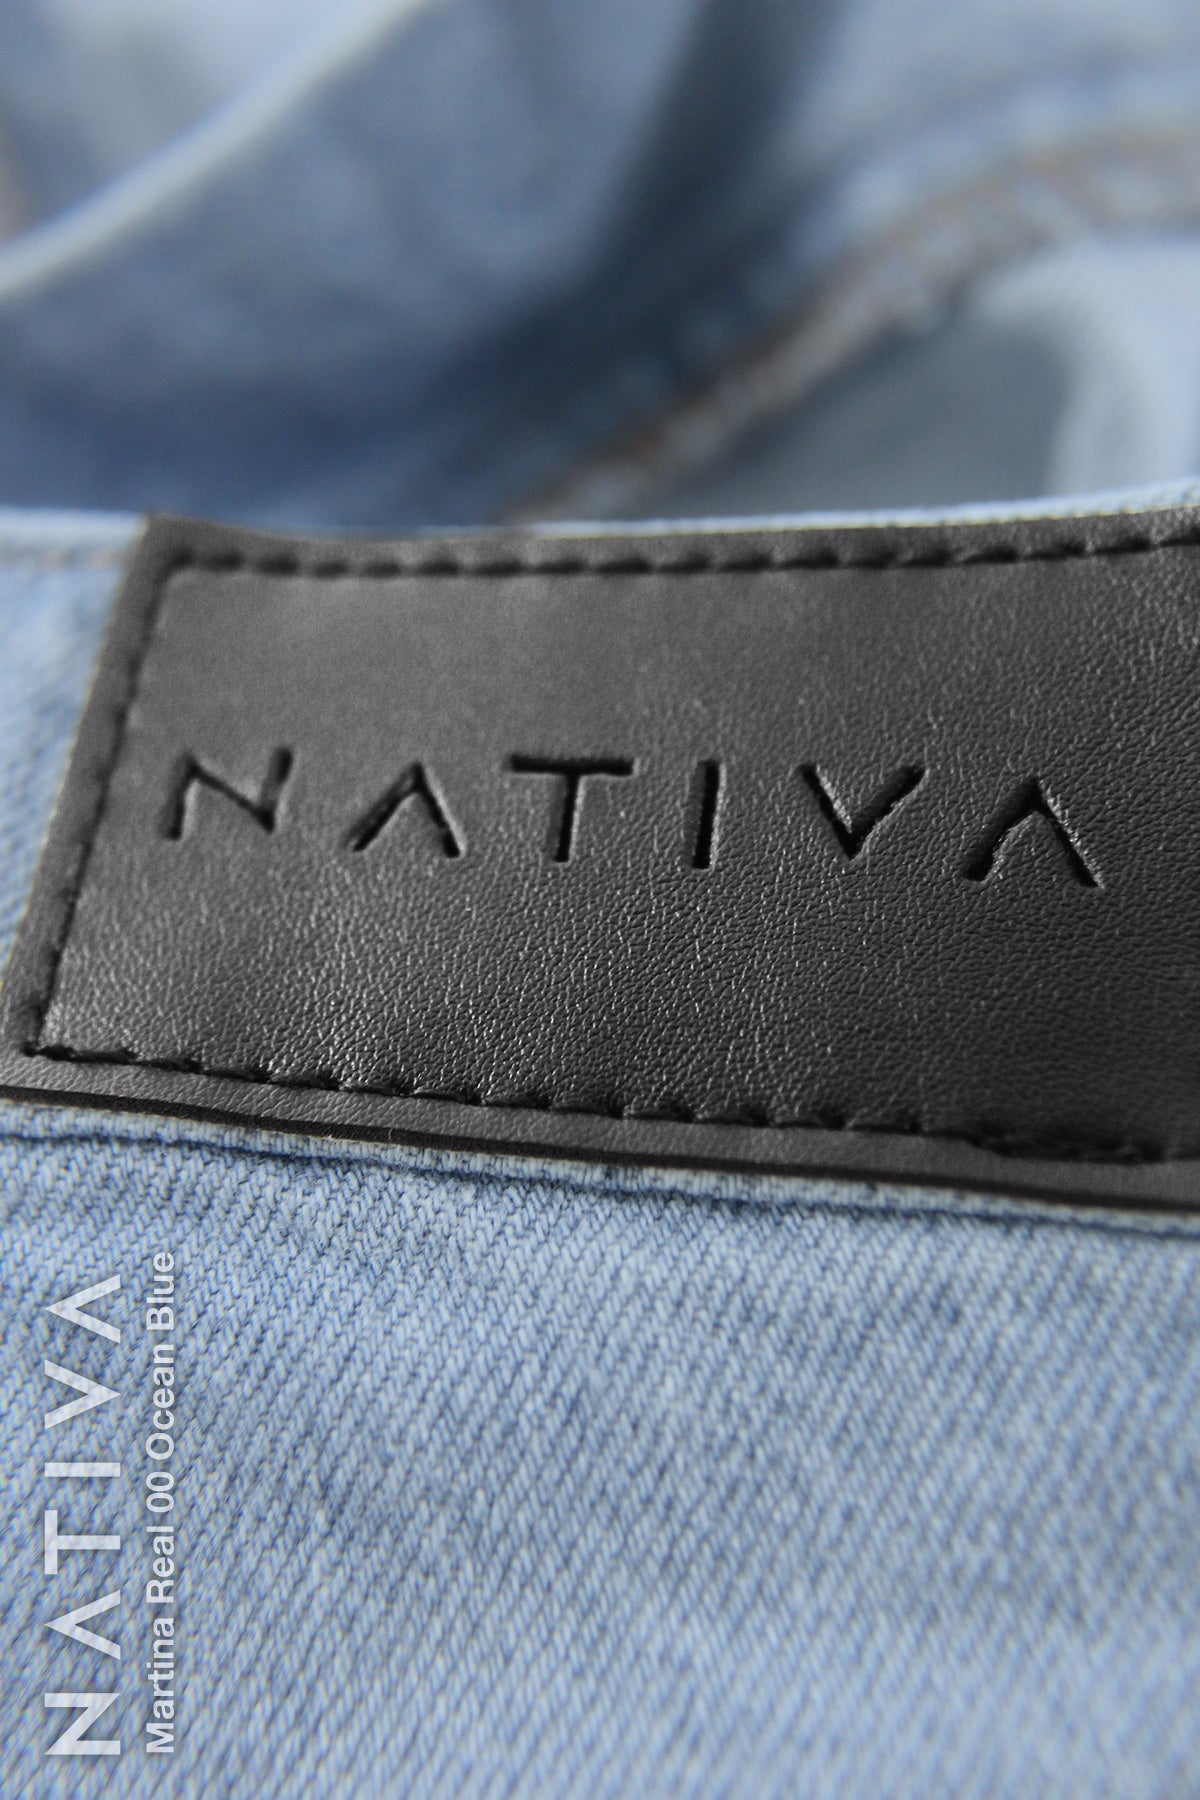 NATIVA, RIGID JEANS. MARTINA REAL 01 OCEAN BLUE, 100% True Denim Native Virgin Cotton, Ideal Comfort, Hi-Rise Relaxed Mom Jeans